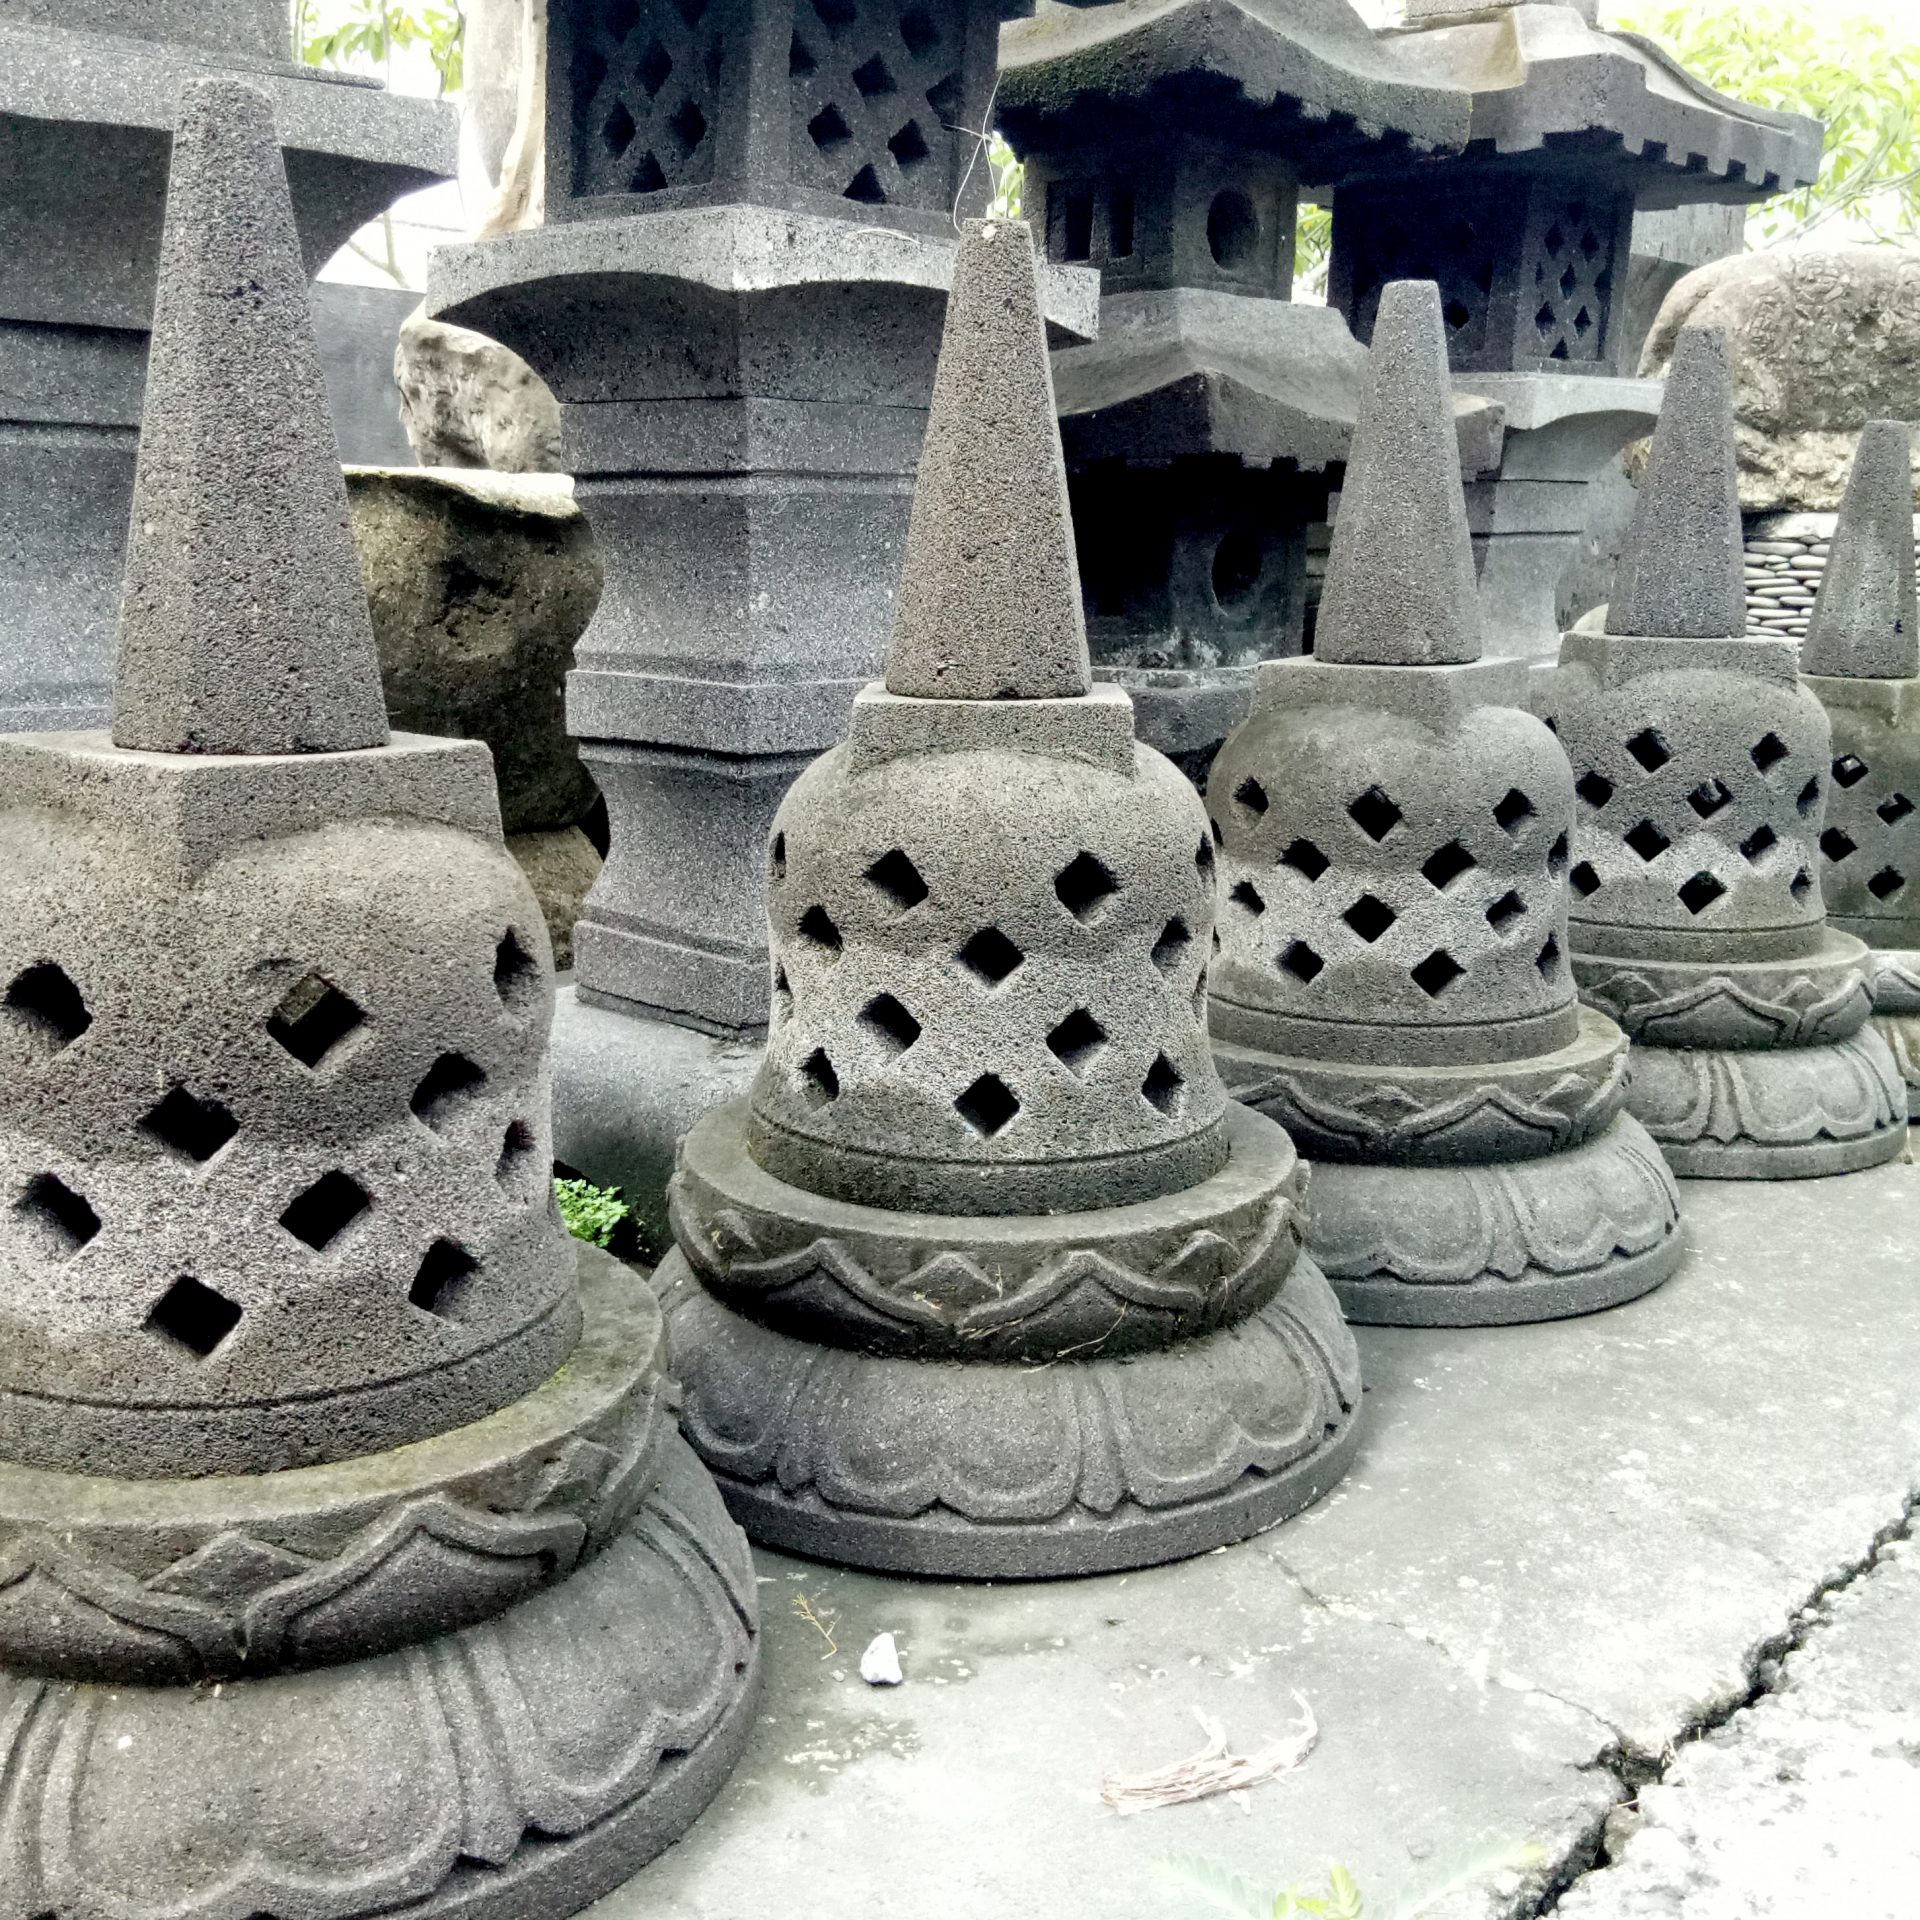 mini borobudur temple replica